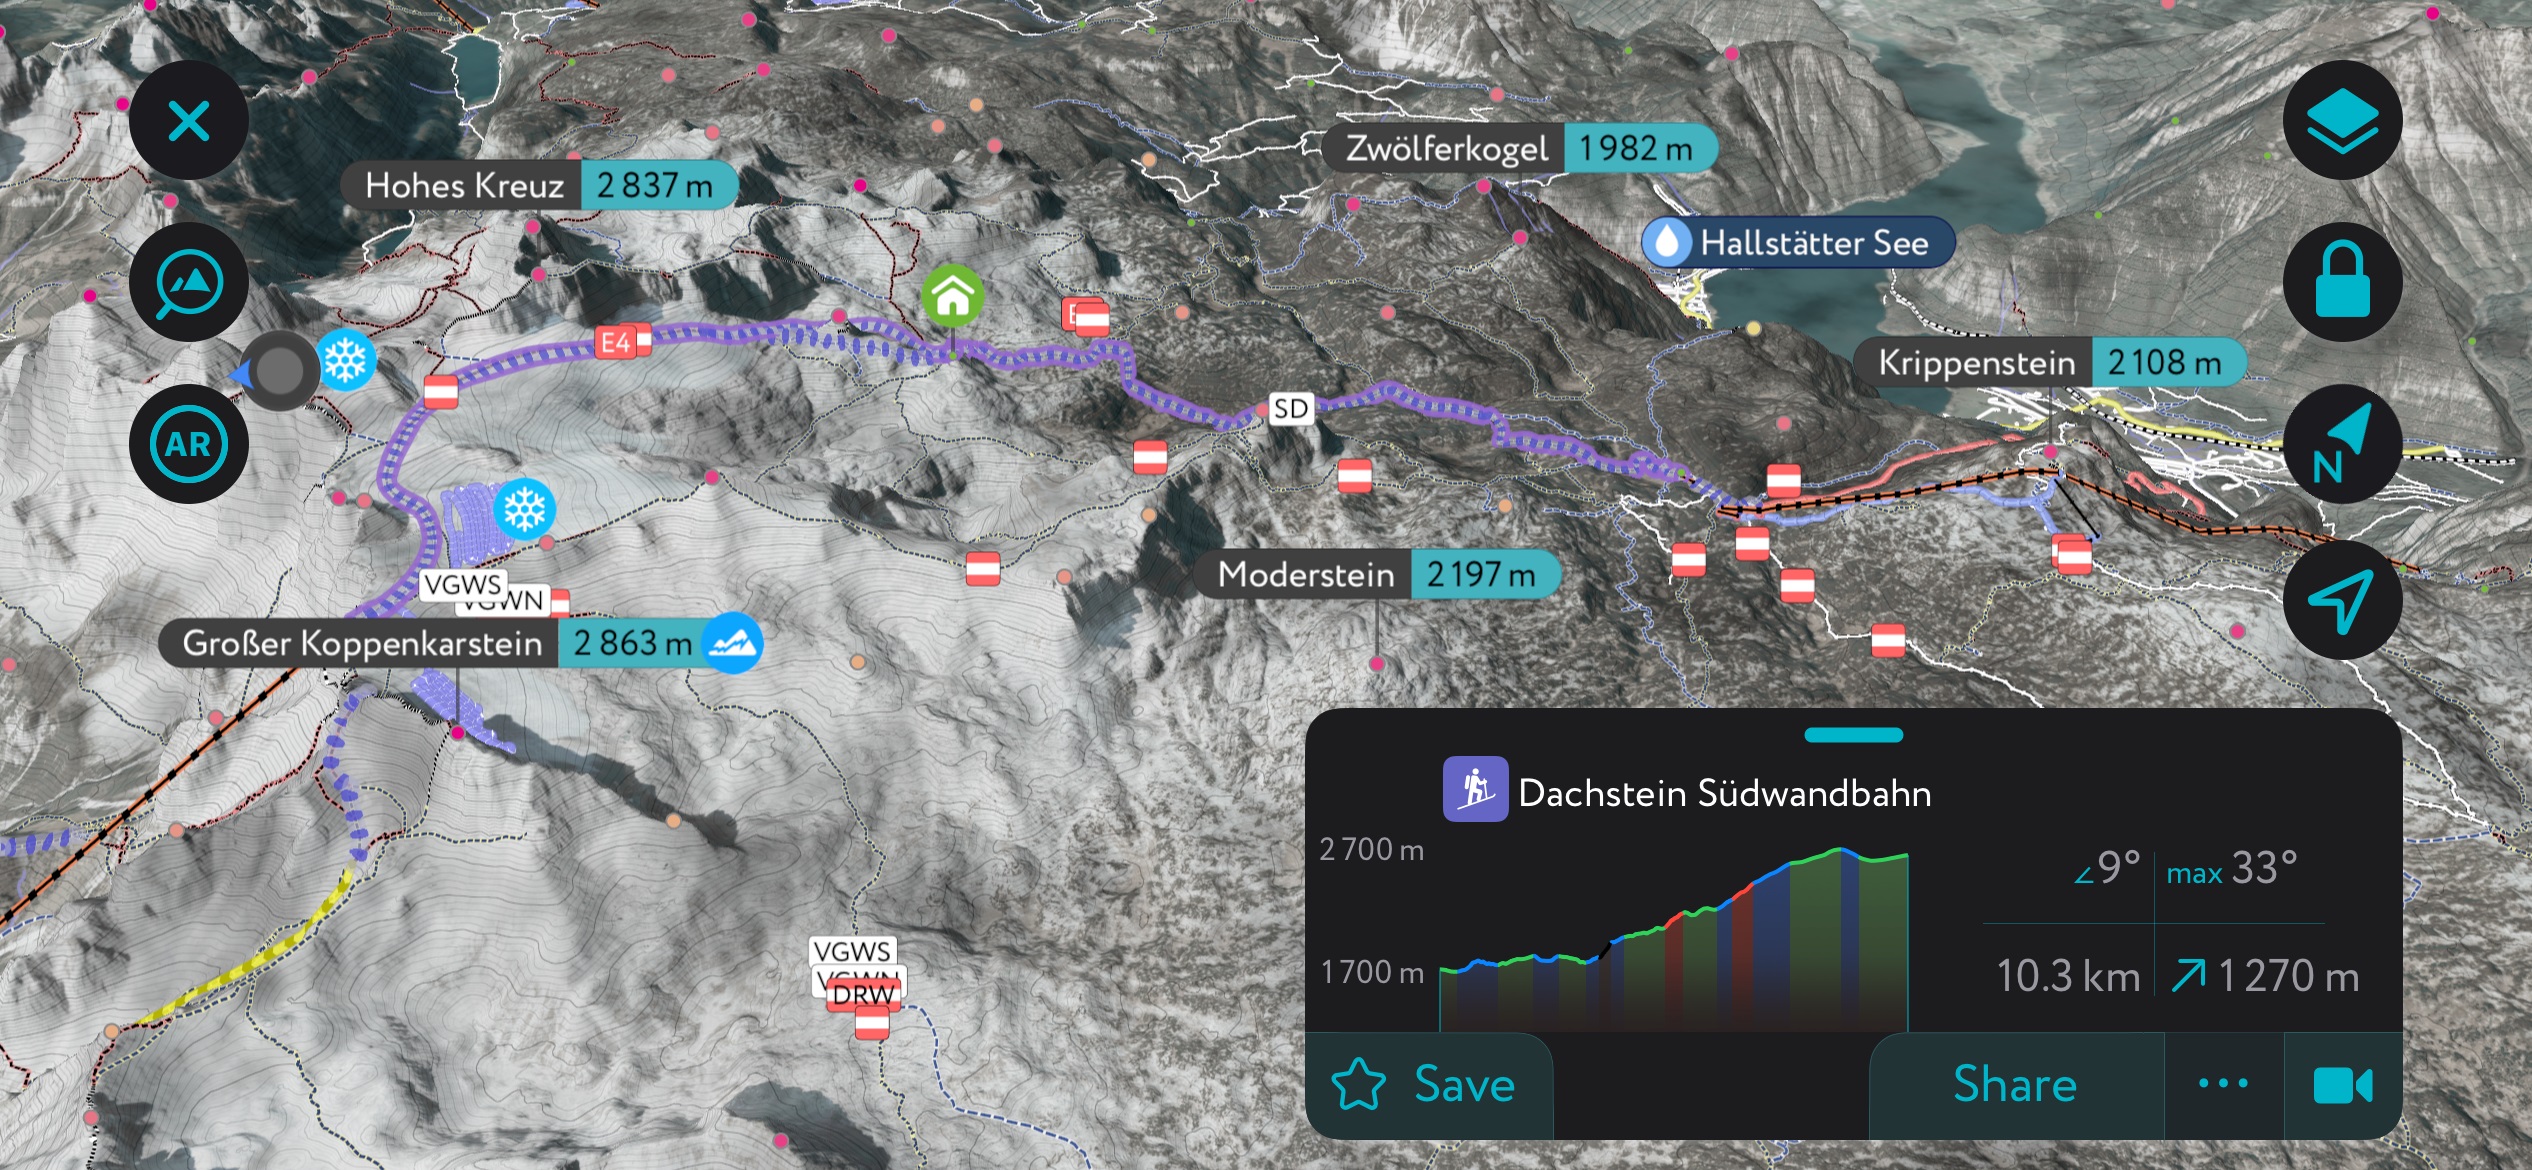 ski touring routes using PeakVisor’s mobile app. Salzkammergut Upper Austria